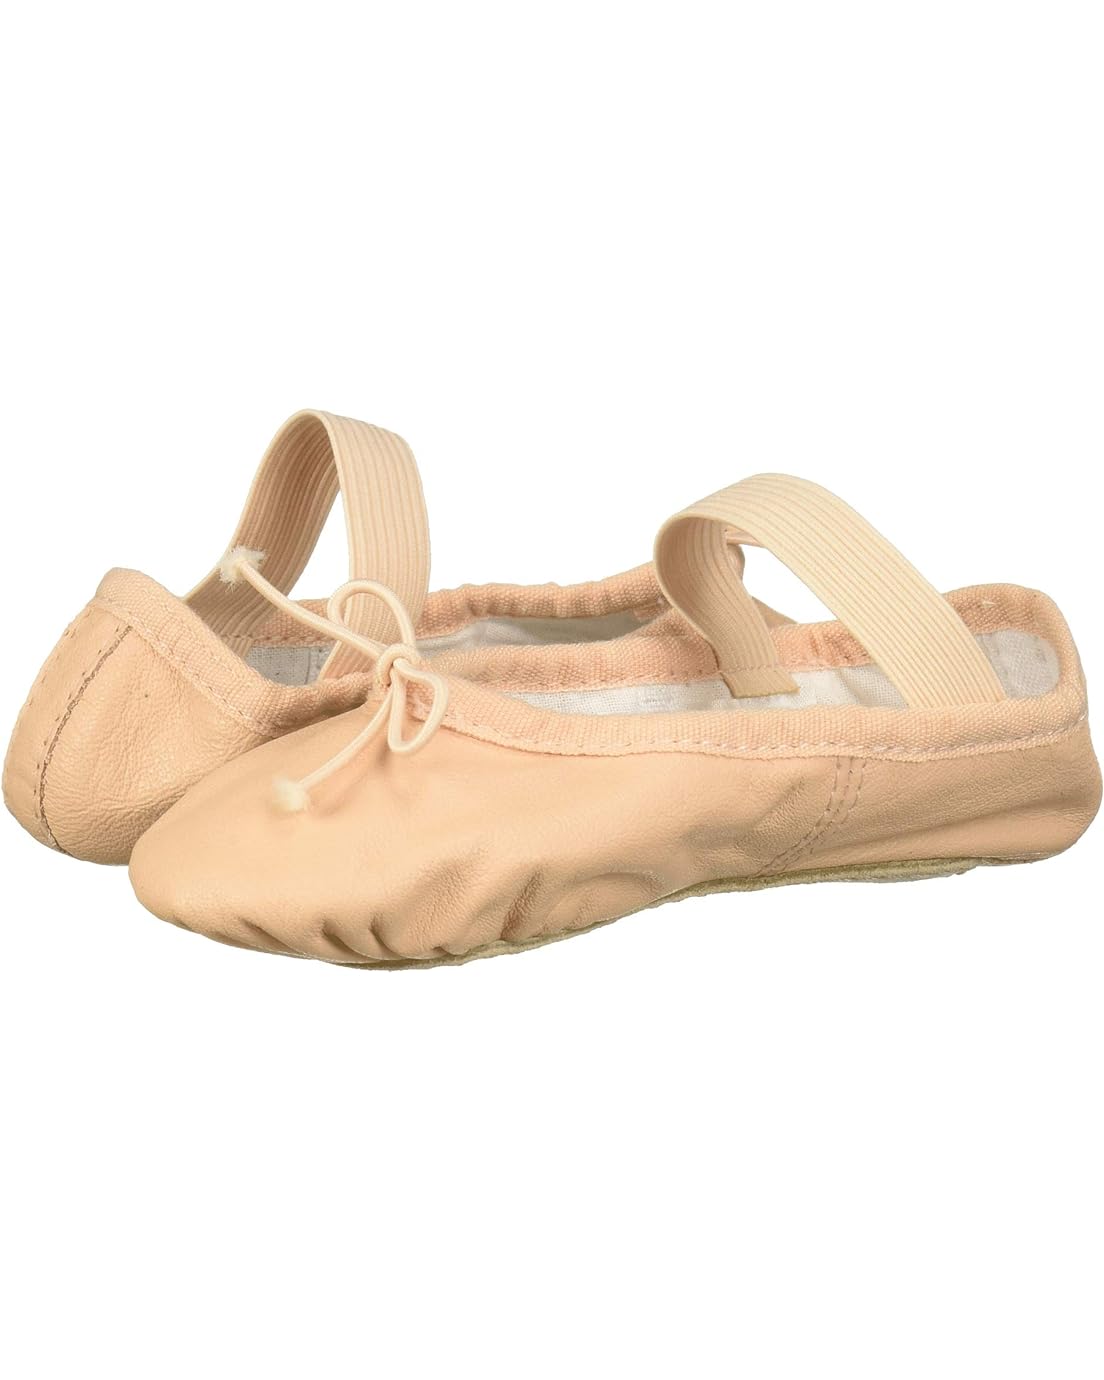  Bloch Kids Dansoft Ballet Shoe (Toddler/Little Kid)